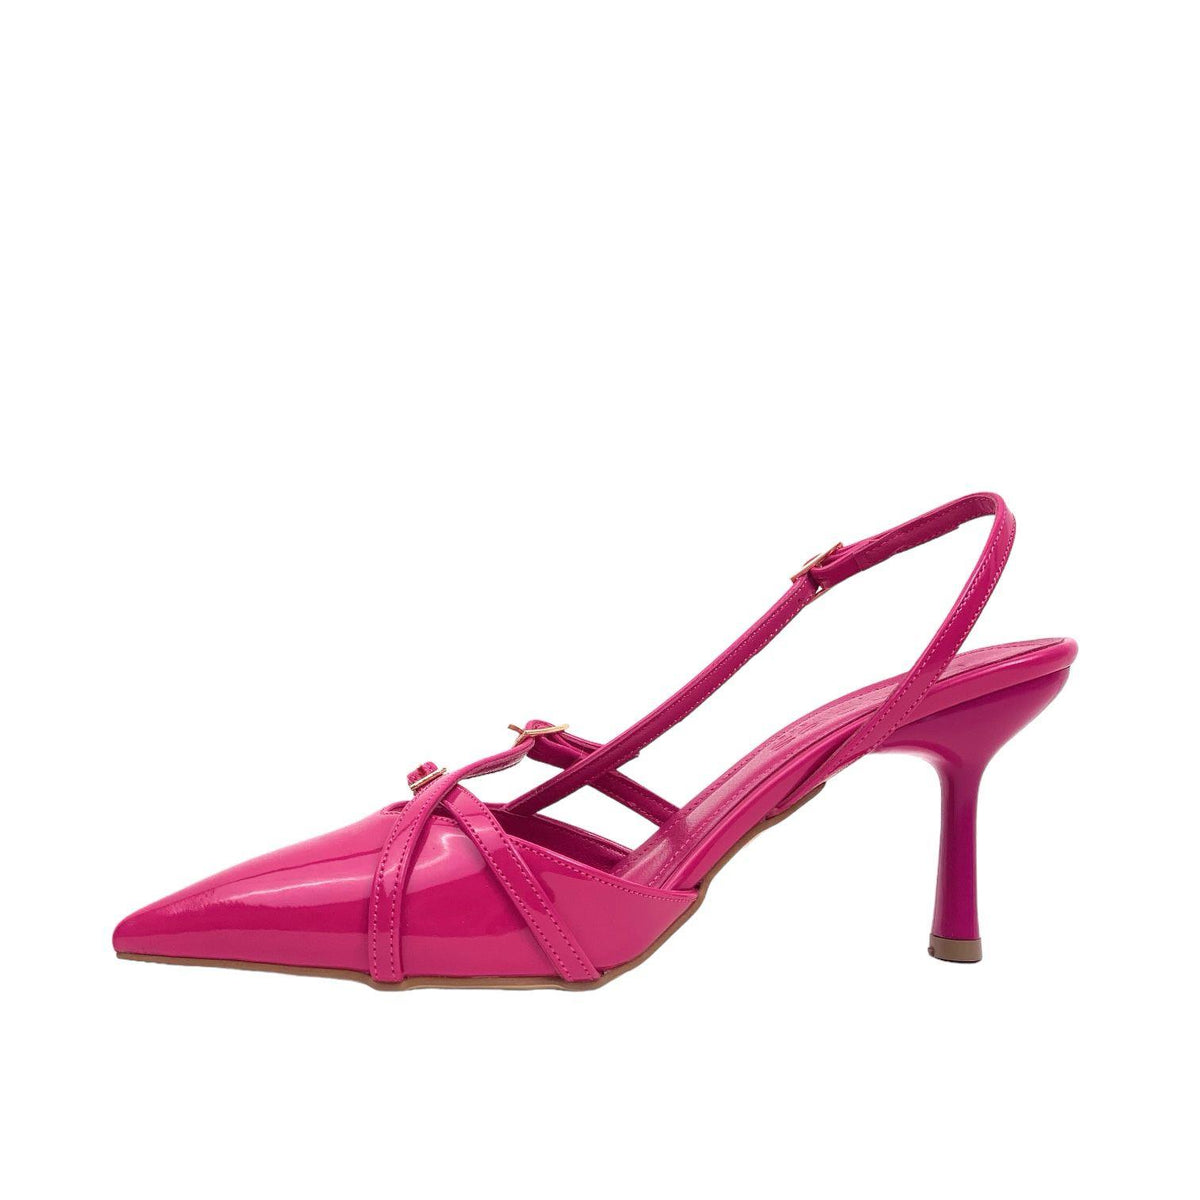 Women's Ferga Fuchsia Double Buckle Heeled Shoes Sandals 7 Cm - STREETMODE™